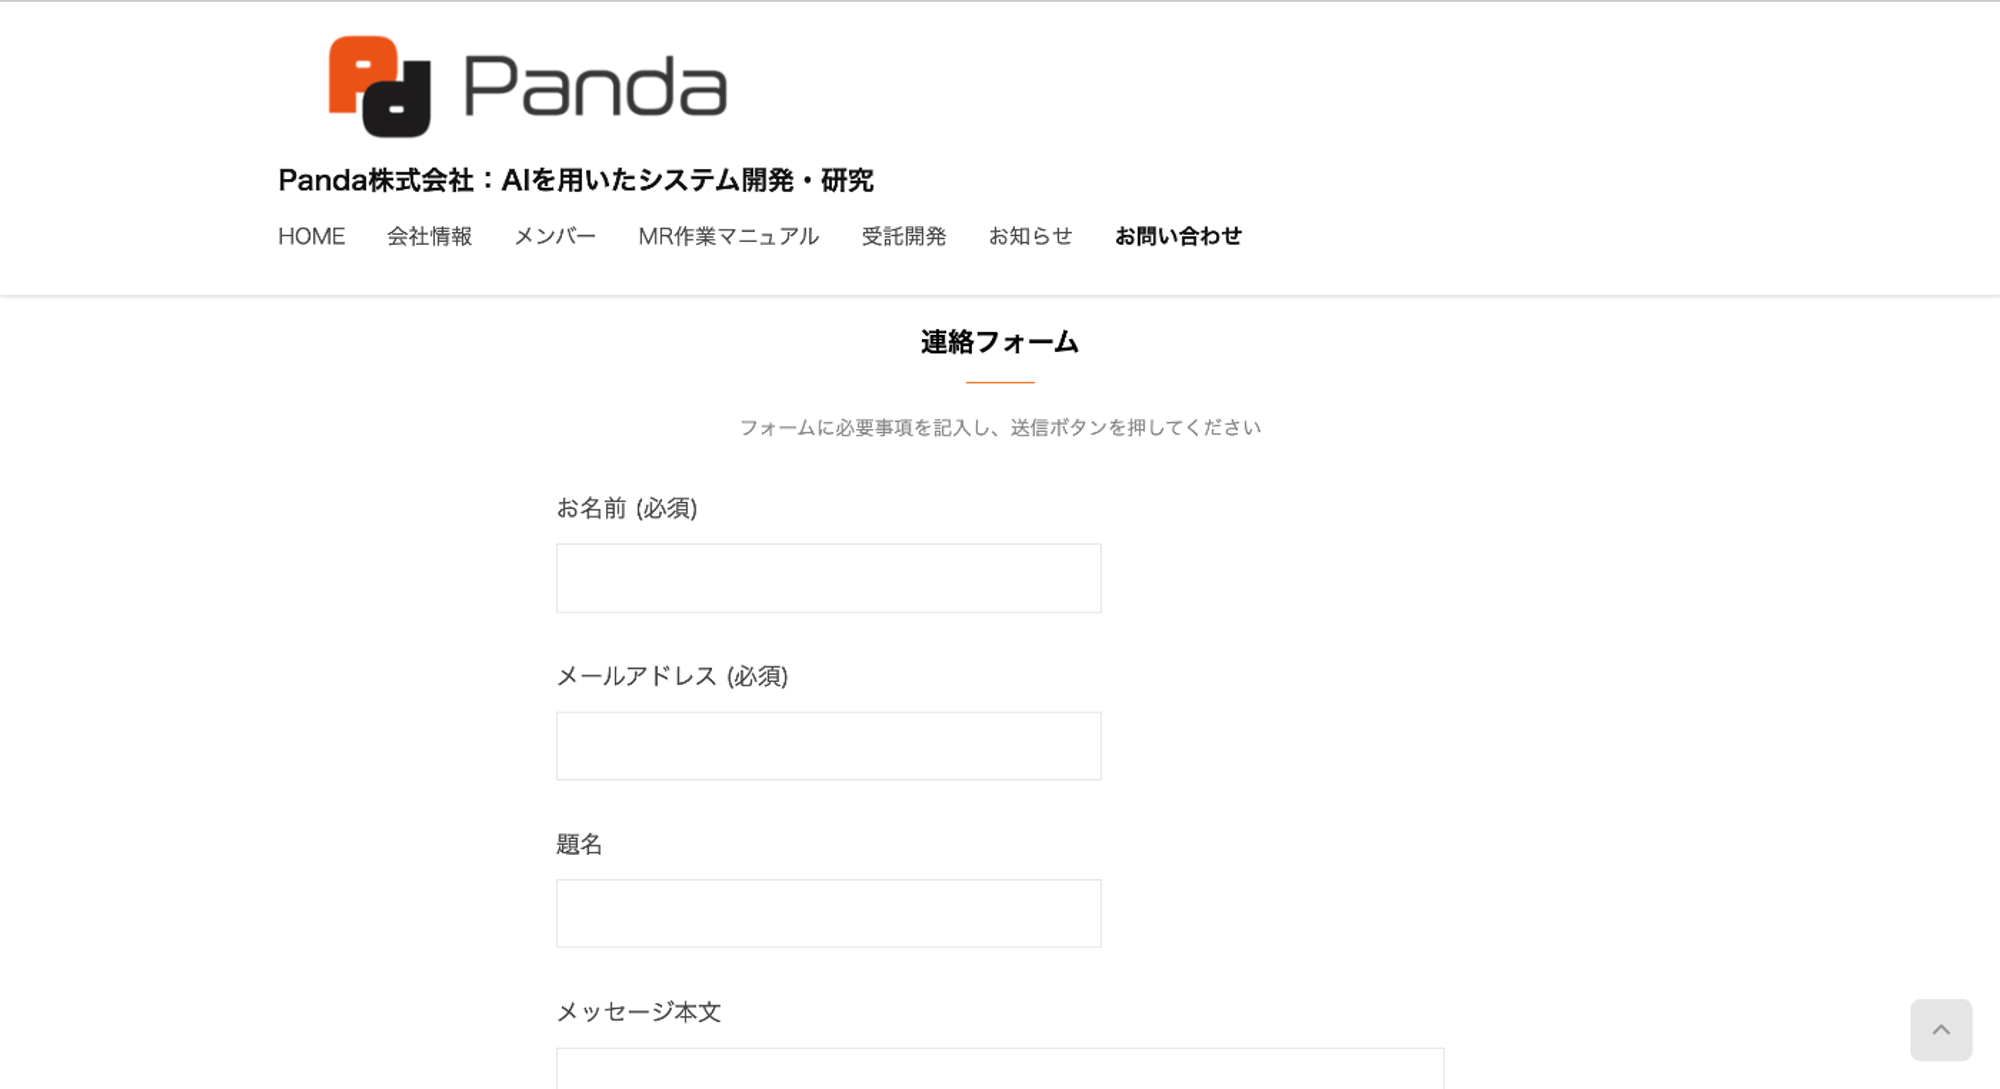 Panda株式会社のお問い合わせフォーム.png